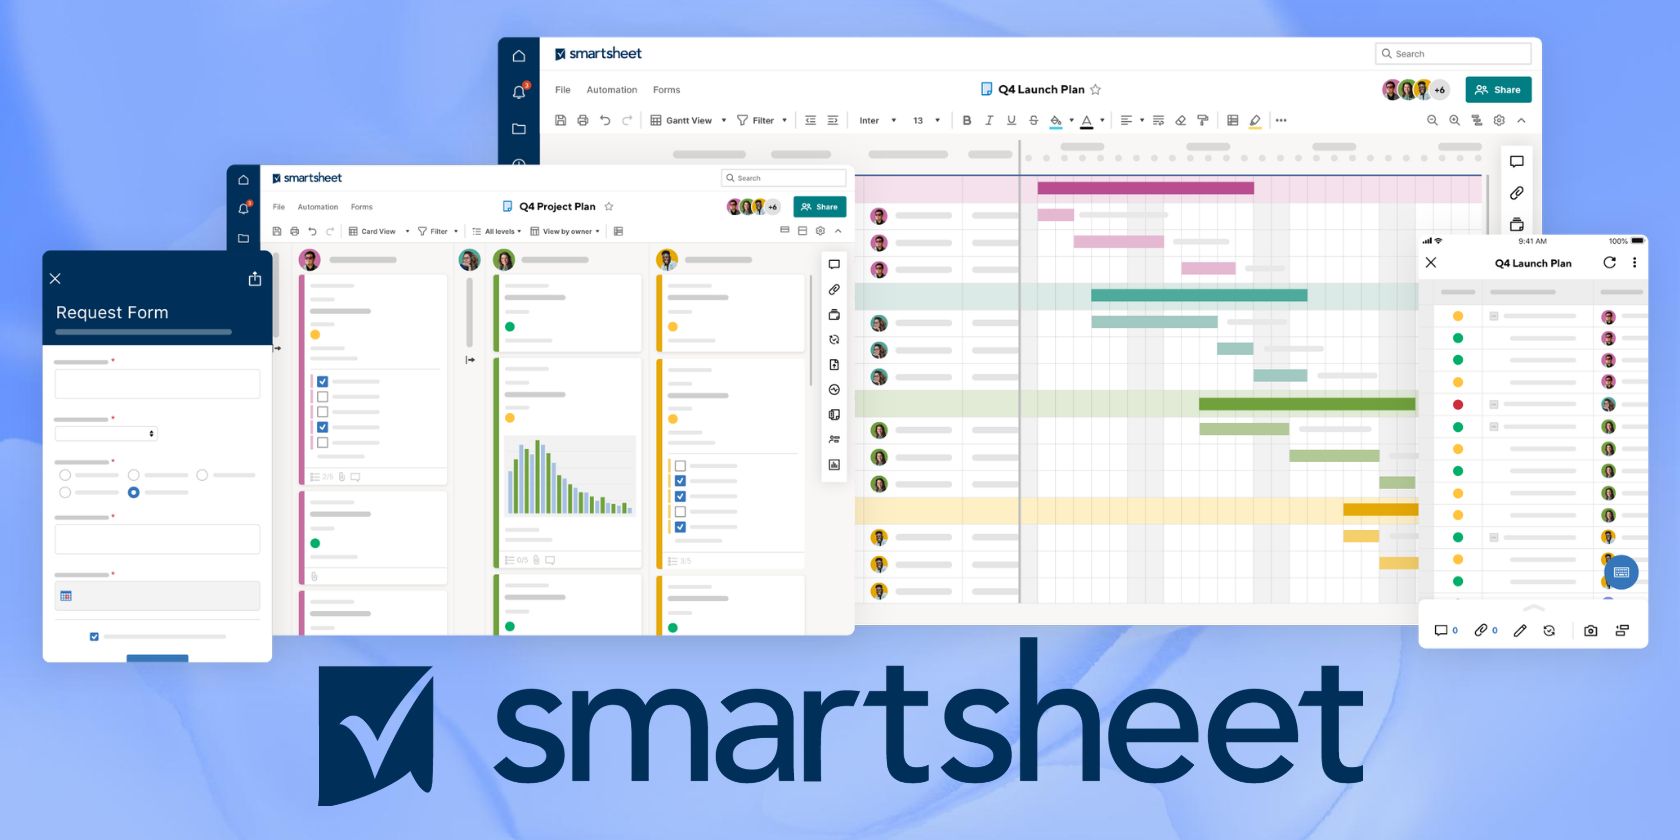 An illustration of Smartsheet app interfaces